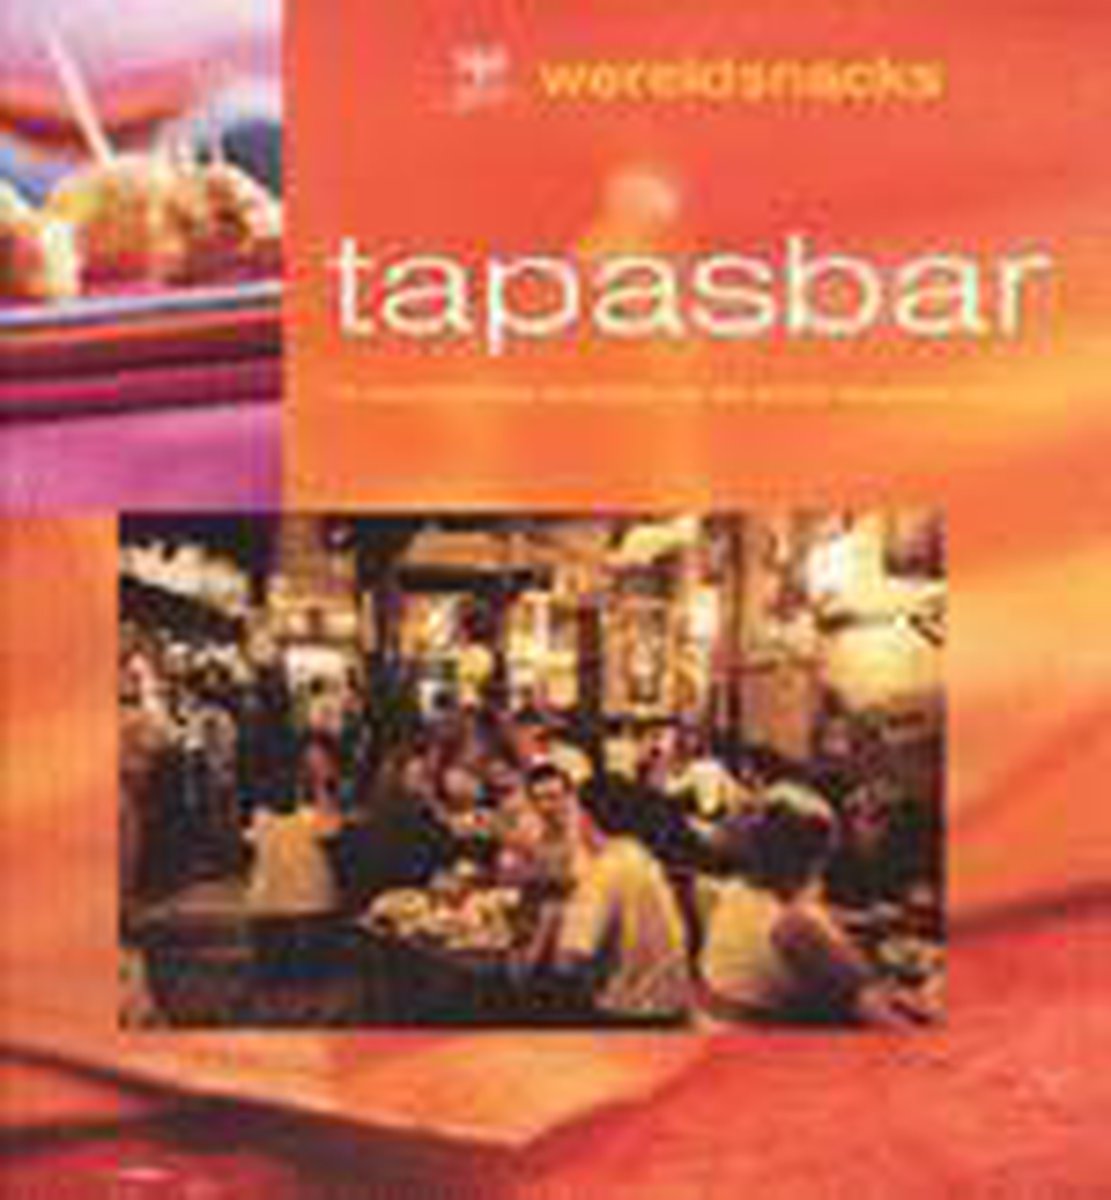 Wereldsnacks Tapasbar